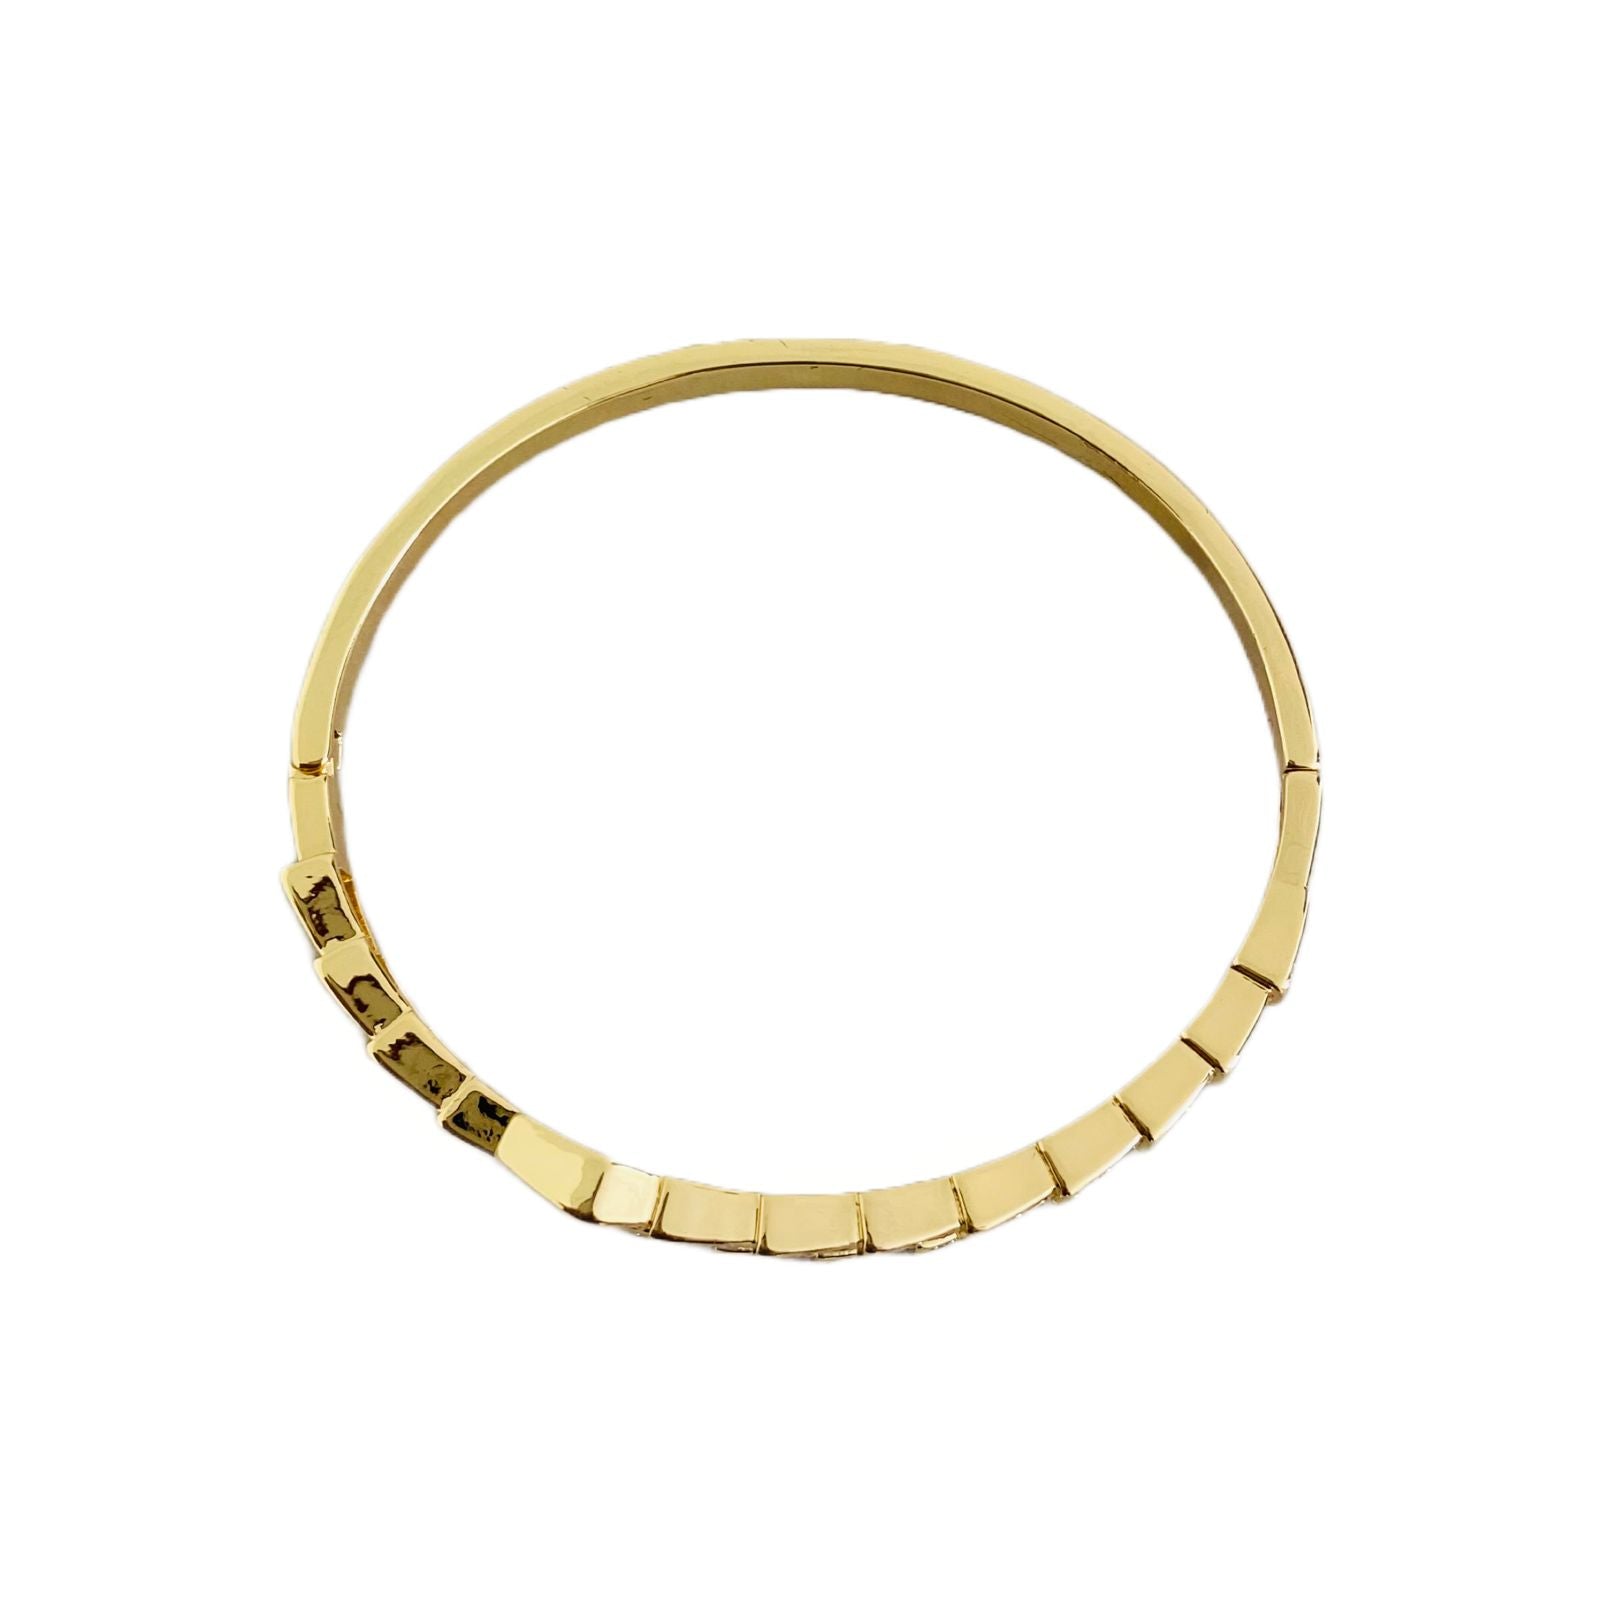 latest design woven rope charm jewelry| Alibaba.com